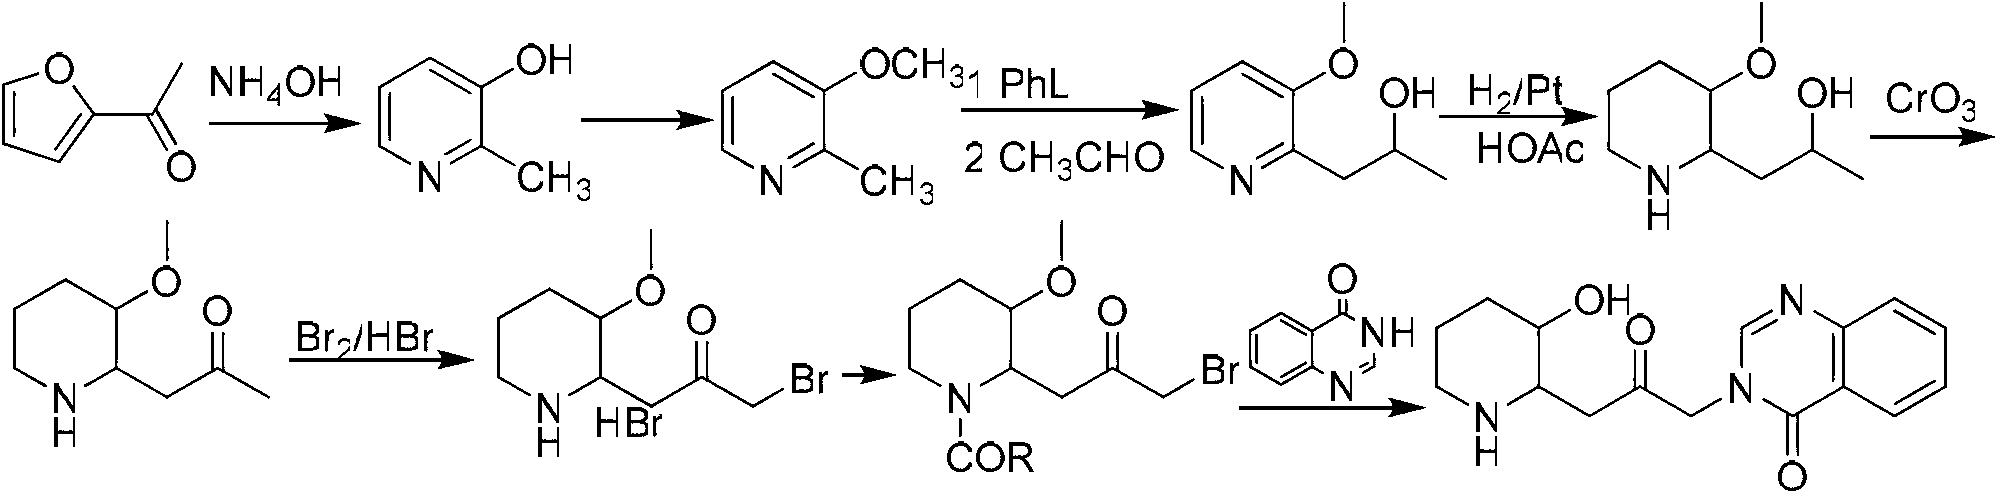 Method for preparing halofuginone hydrobromide